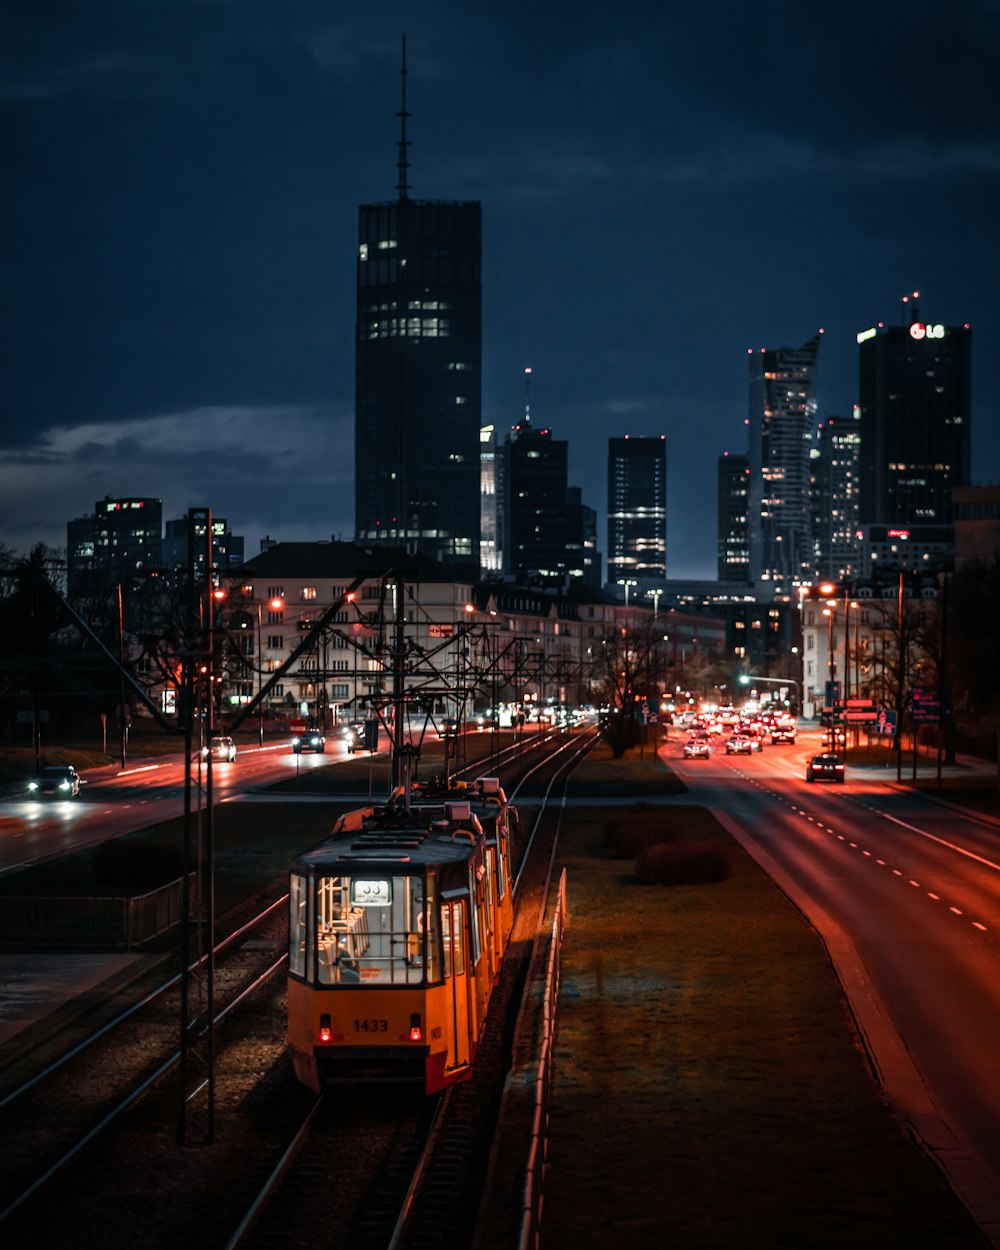 a train traveling down train tracks near a city at night